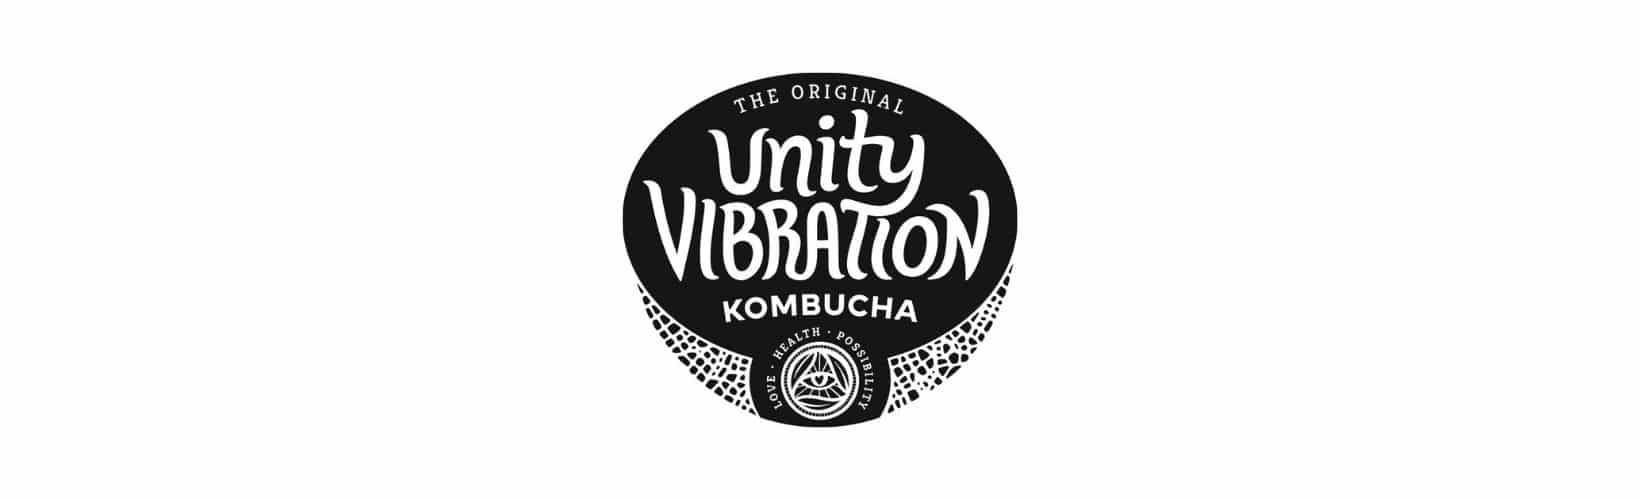 The Original Unity Vibration Kombucha - Logo